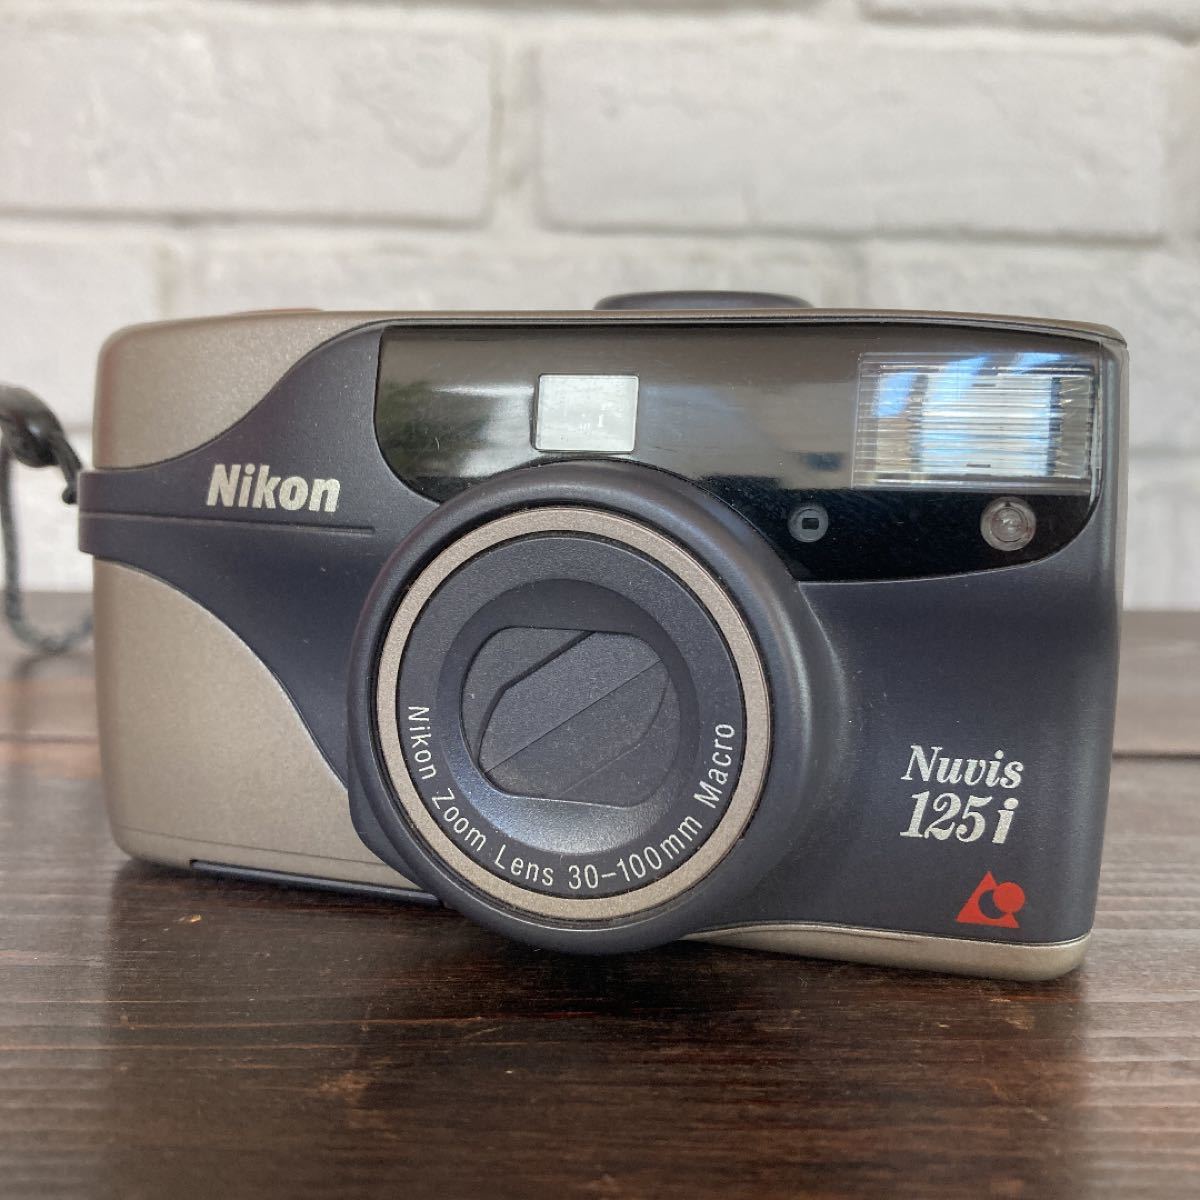 Nikon ニコン Nuvis125i フィルムカメラ【ジャンク】